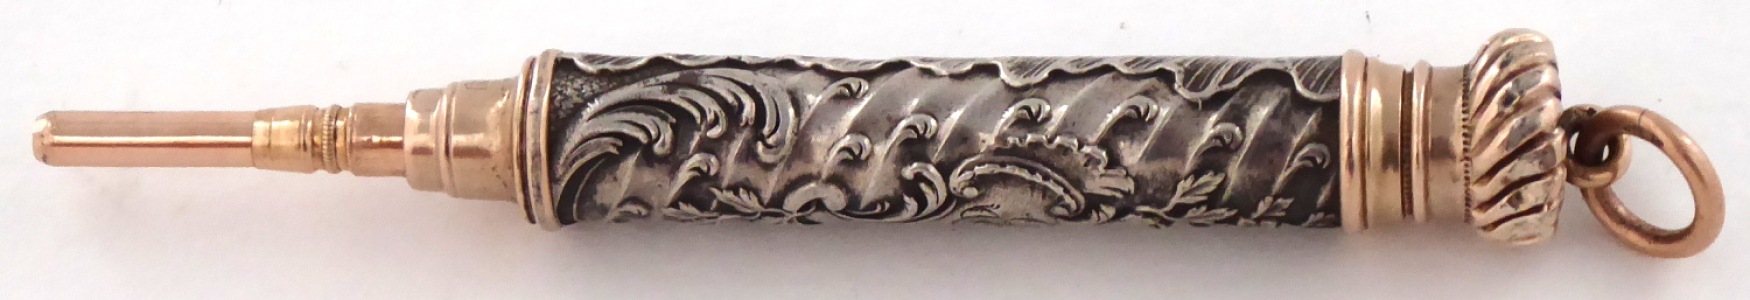 Stříbrná a pozlacená tužka s kartuší (1).JPG